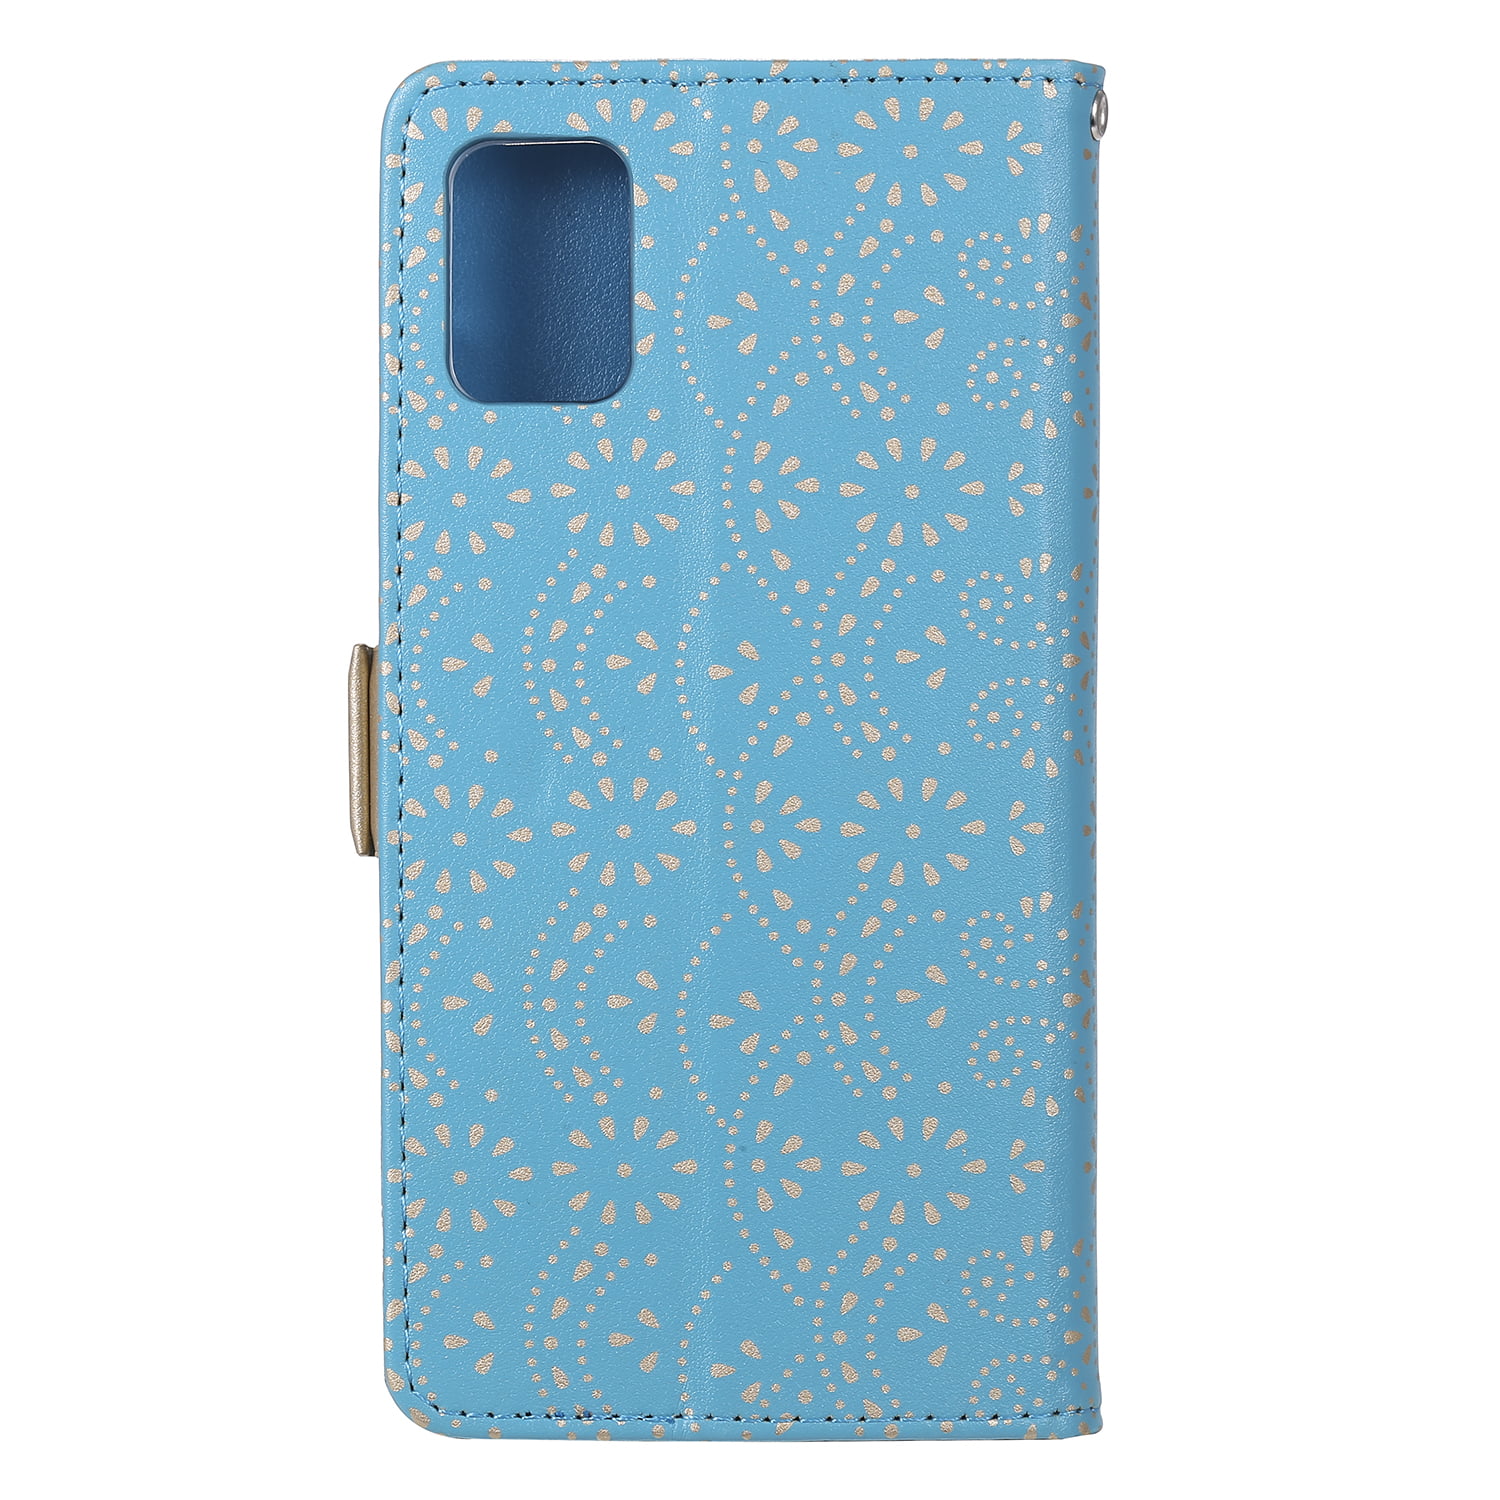 Galaxy A51(4G) Wallet Case with Zipper, Allytech PU Leather Folio 